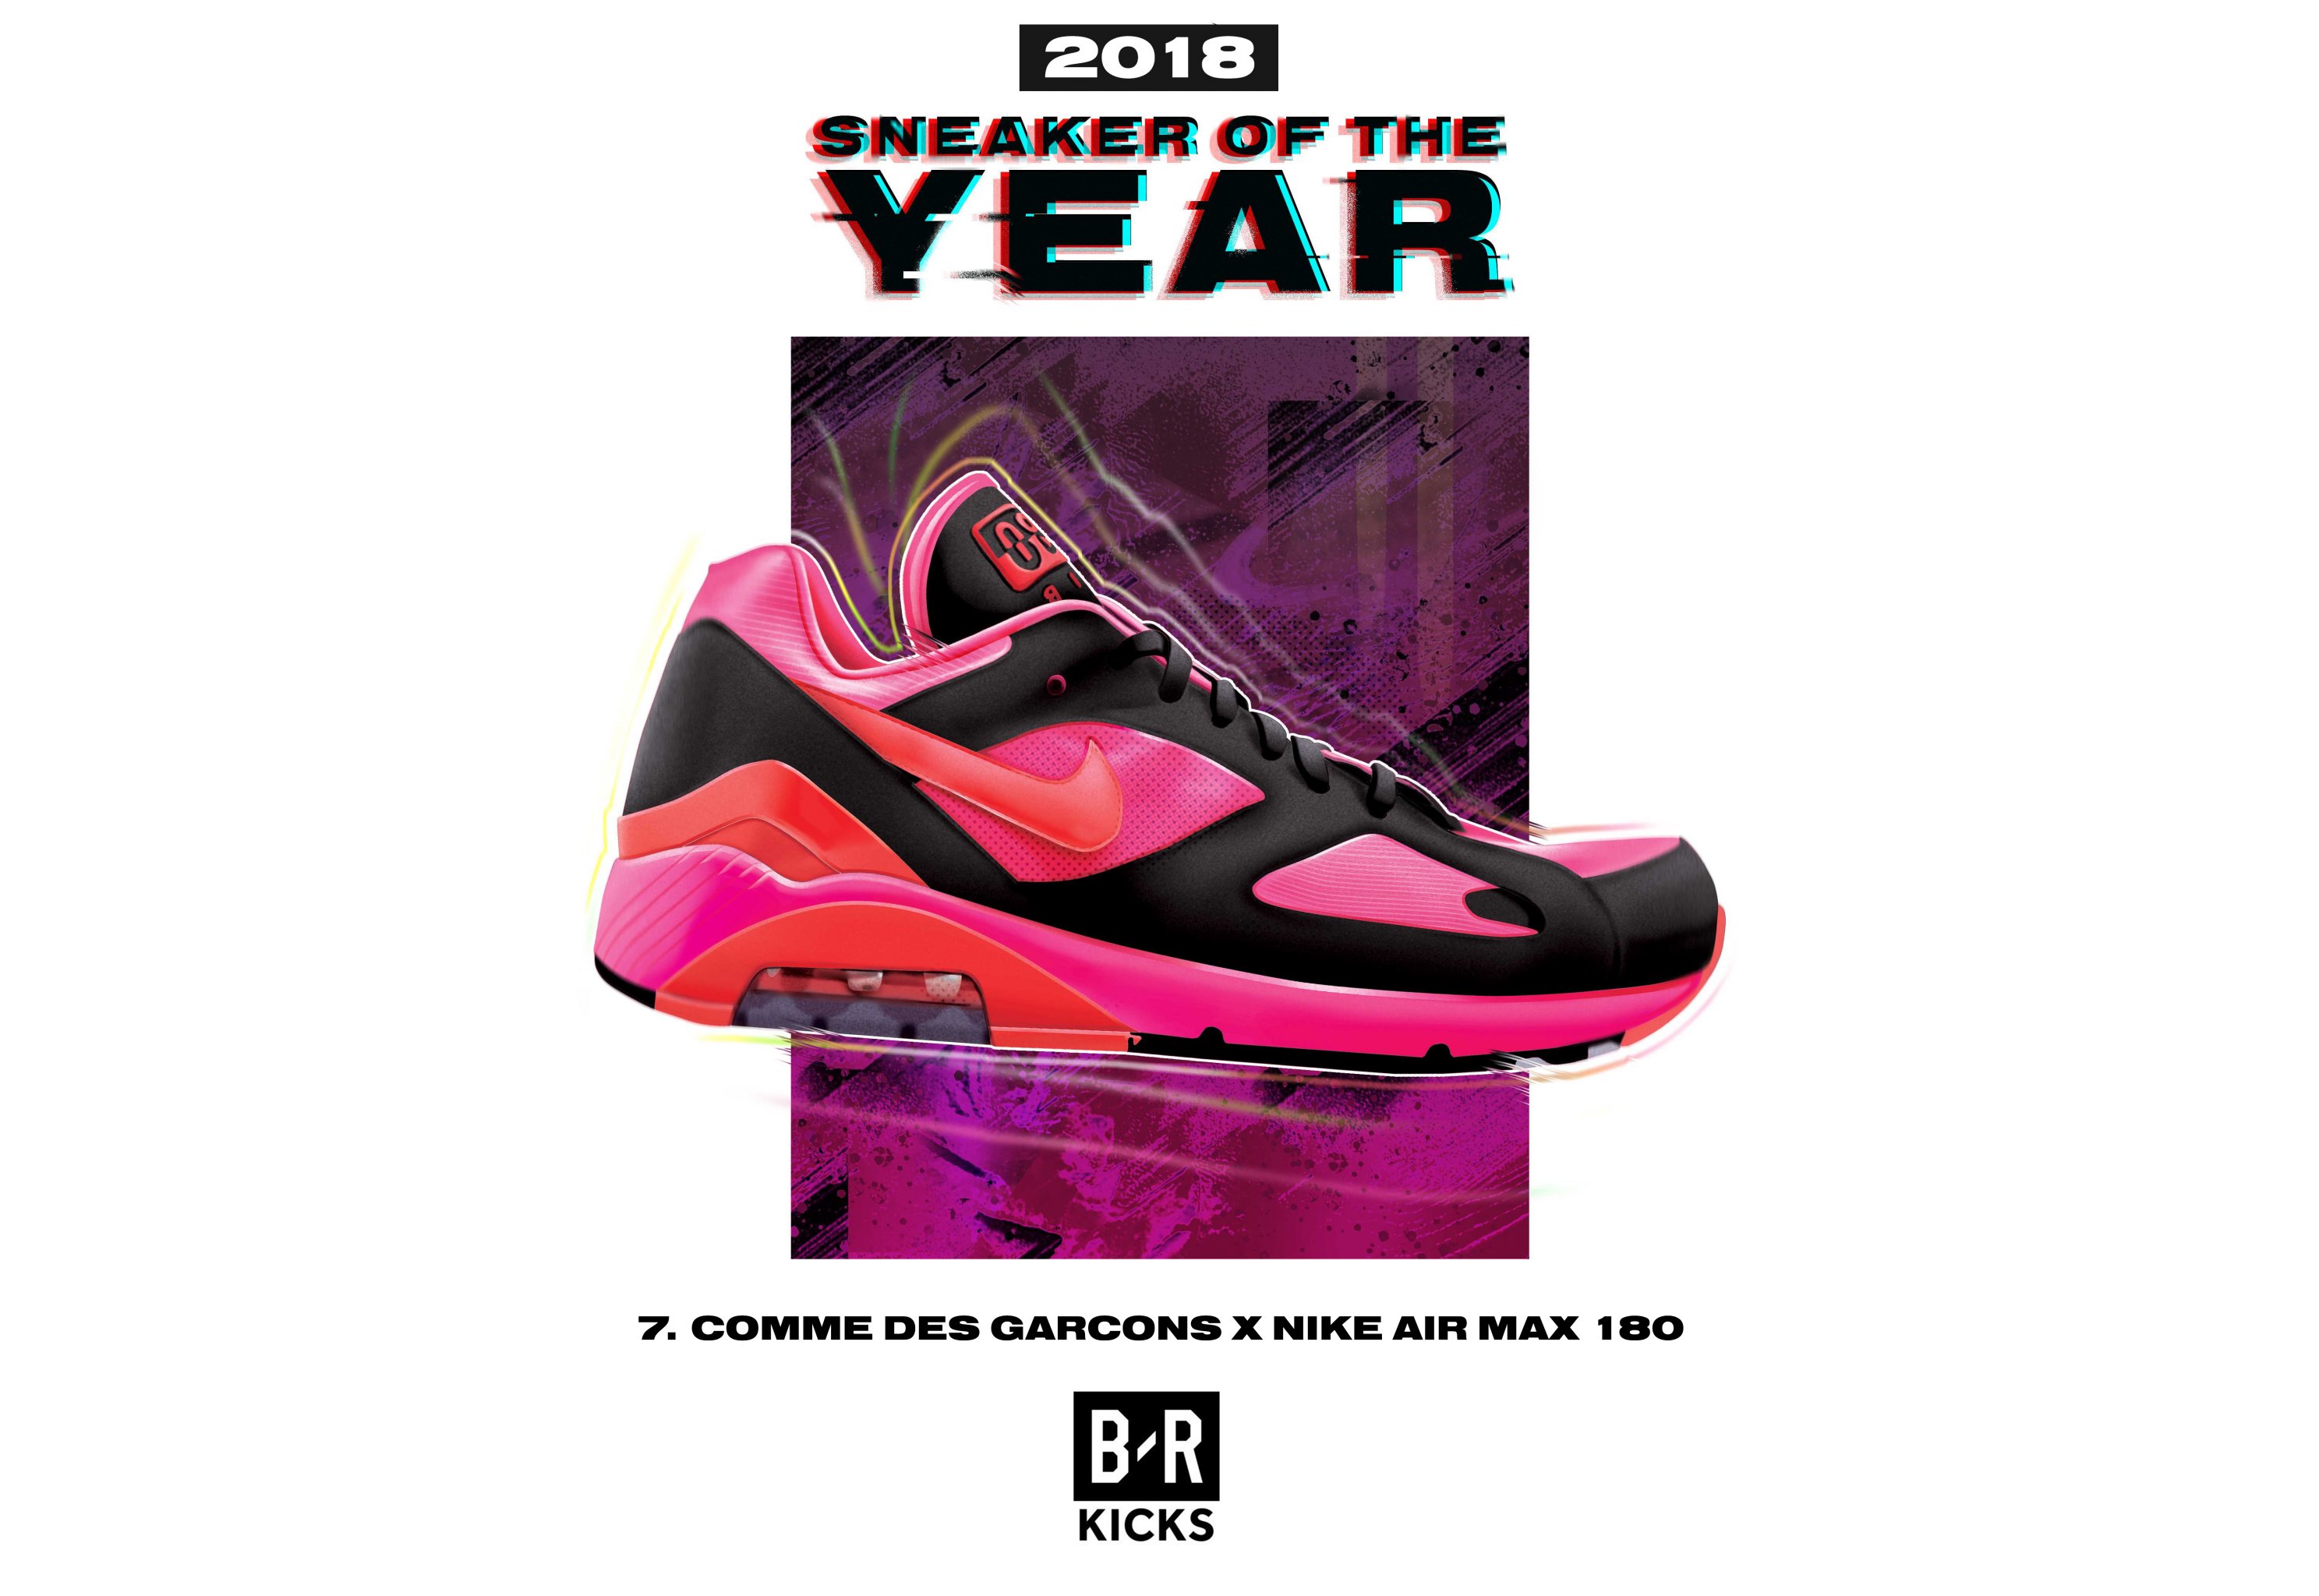 The Nike Air Max 1 Steelers Releases November 2 - Sneaker News